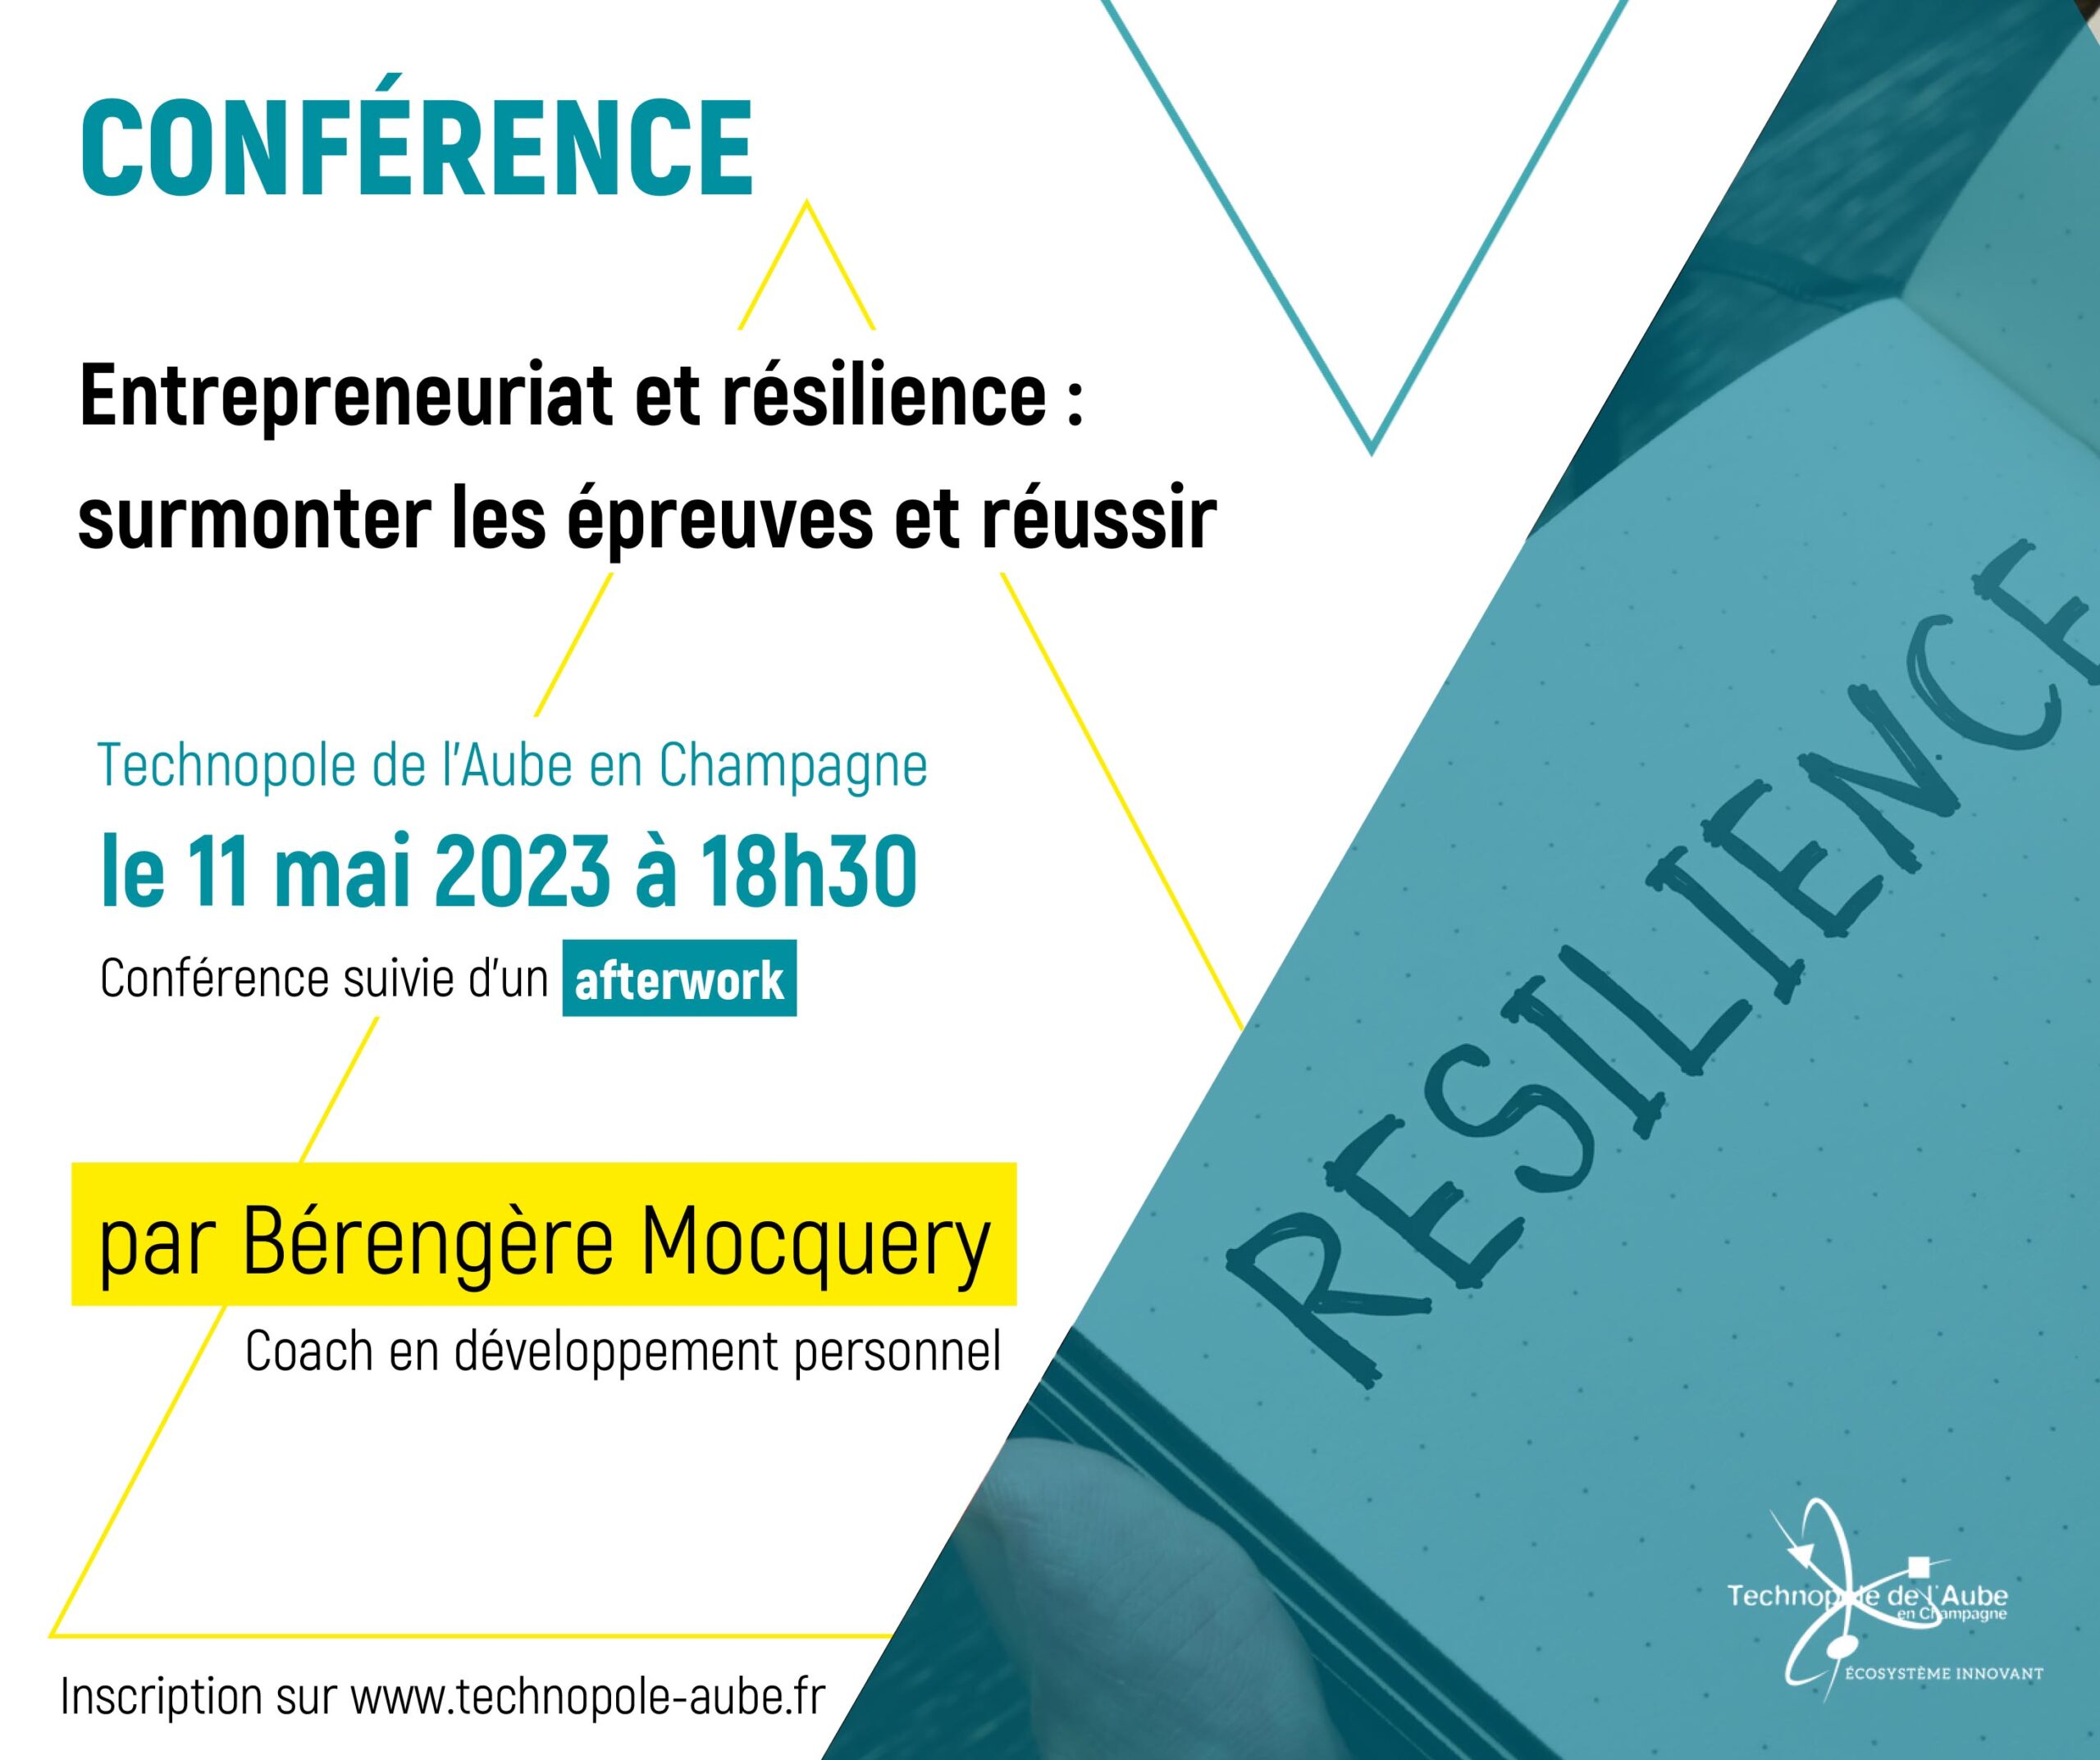 entrepreneuriat-resilience-conference-technopole-aube-mai-2023-carre